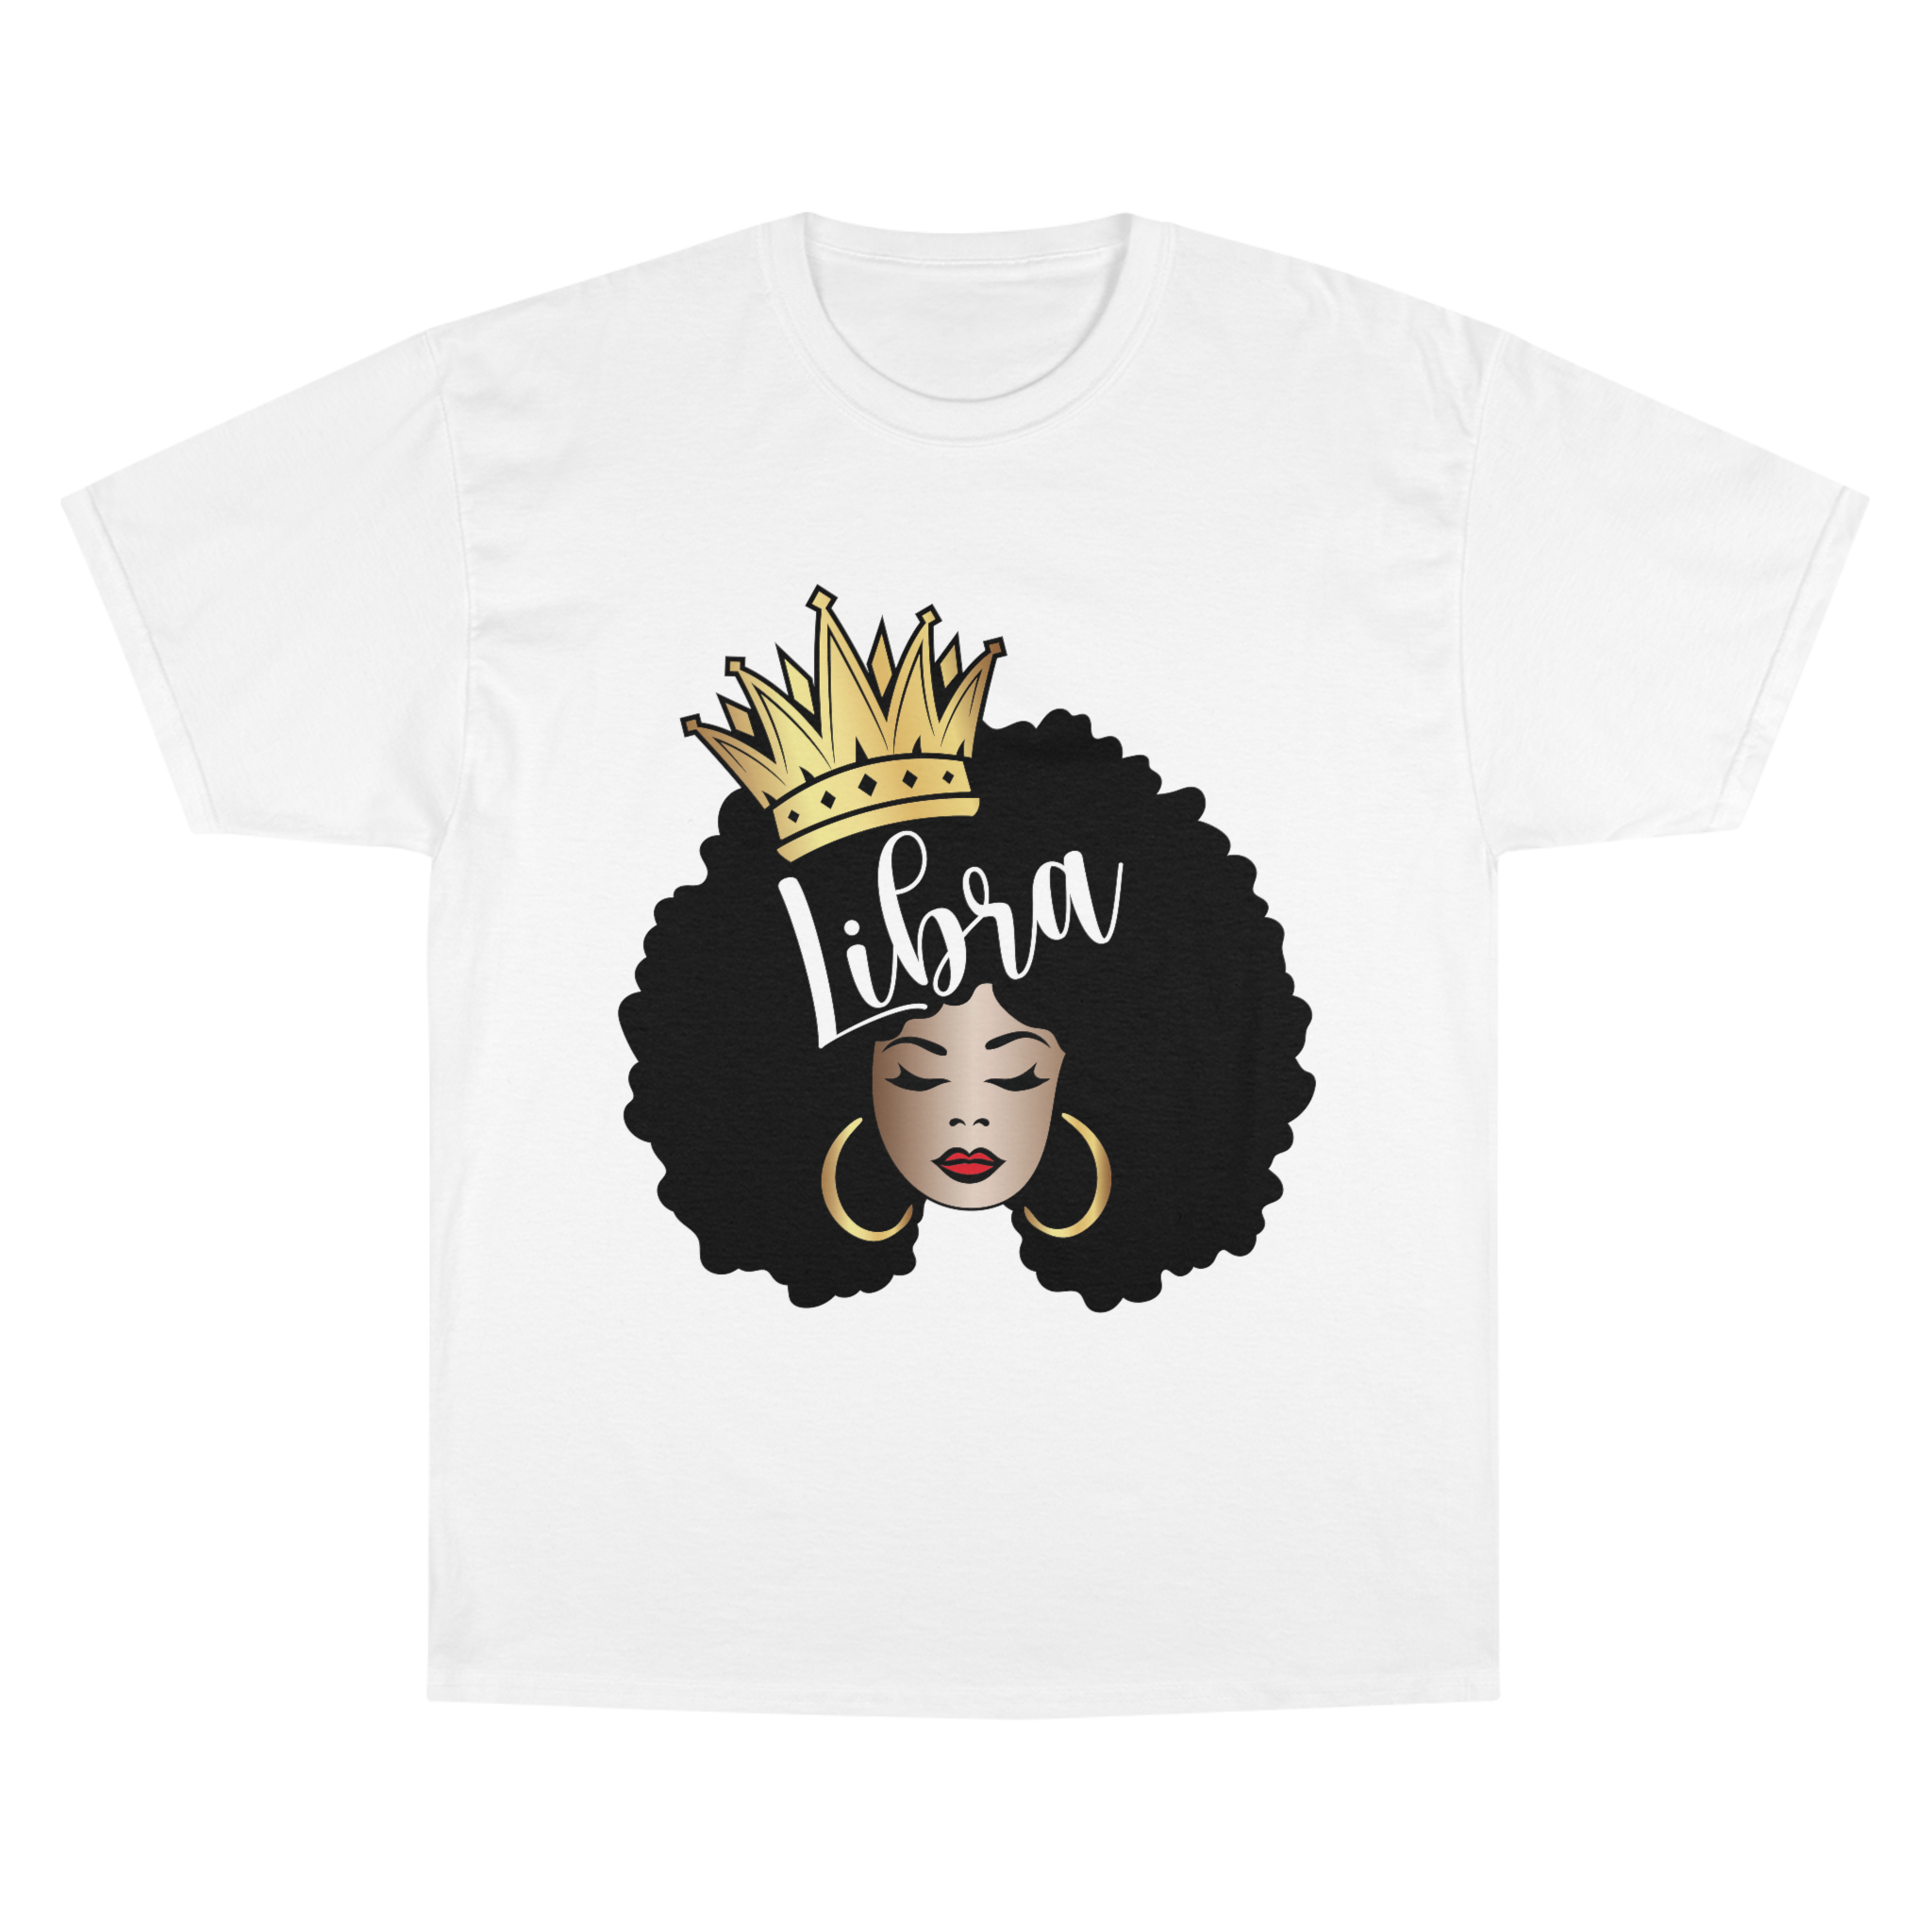 Libra Queen Graphic T-Shirt